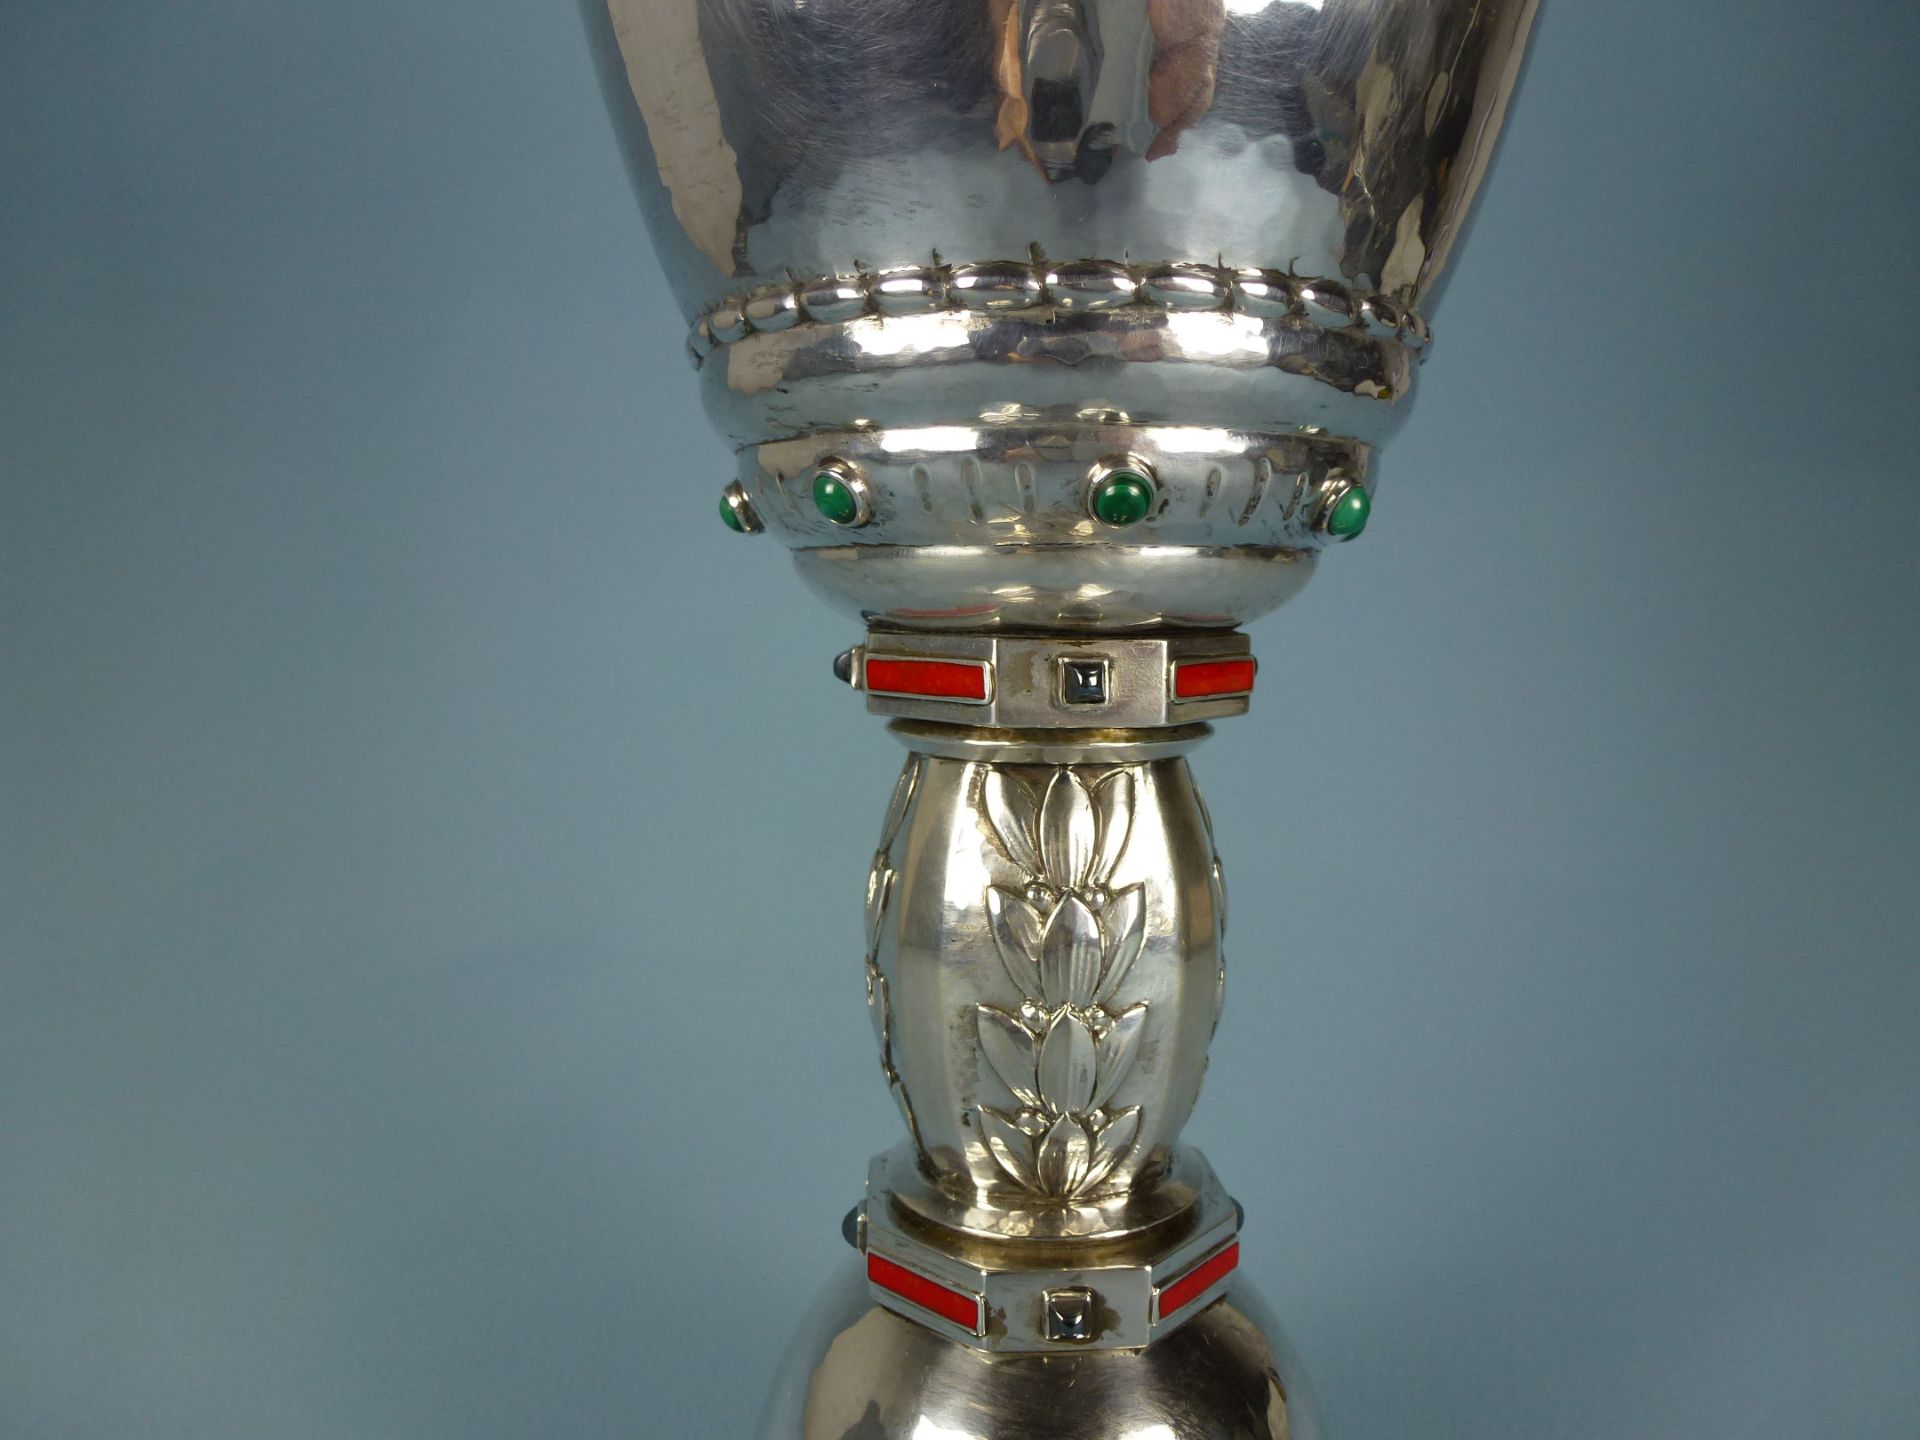 Ballonfahrt-Pokal, Gabriel Hermeling, Köln um 1910, 800er Silber - Bild 4 aus 8